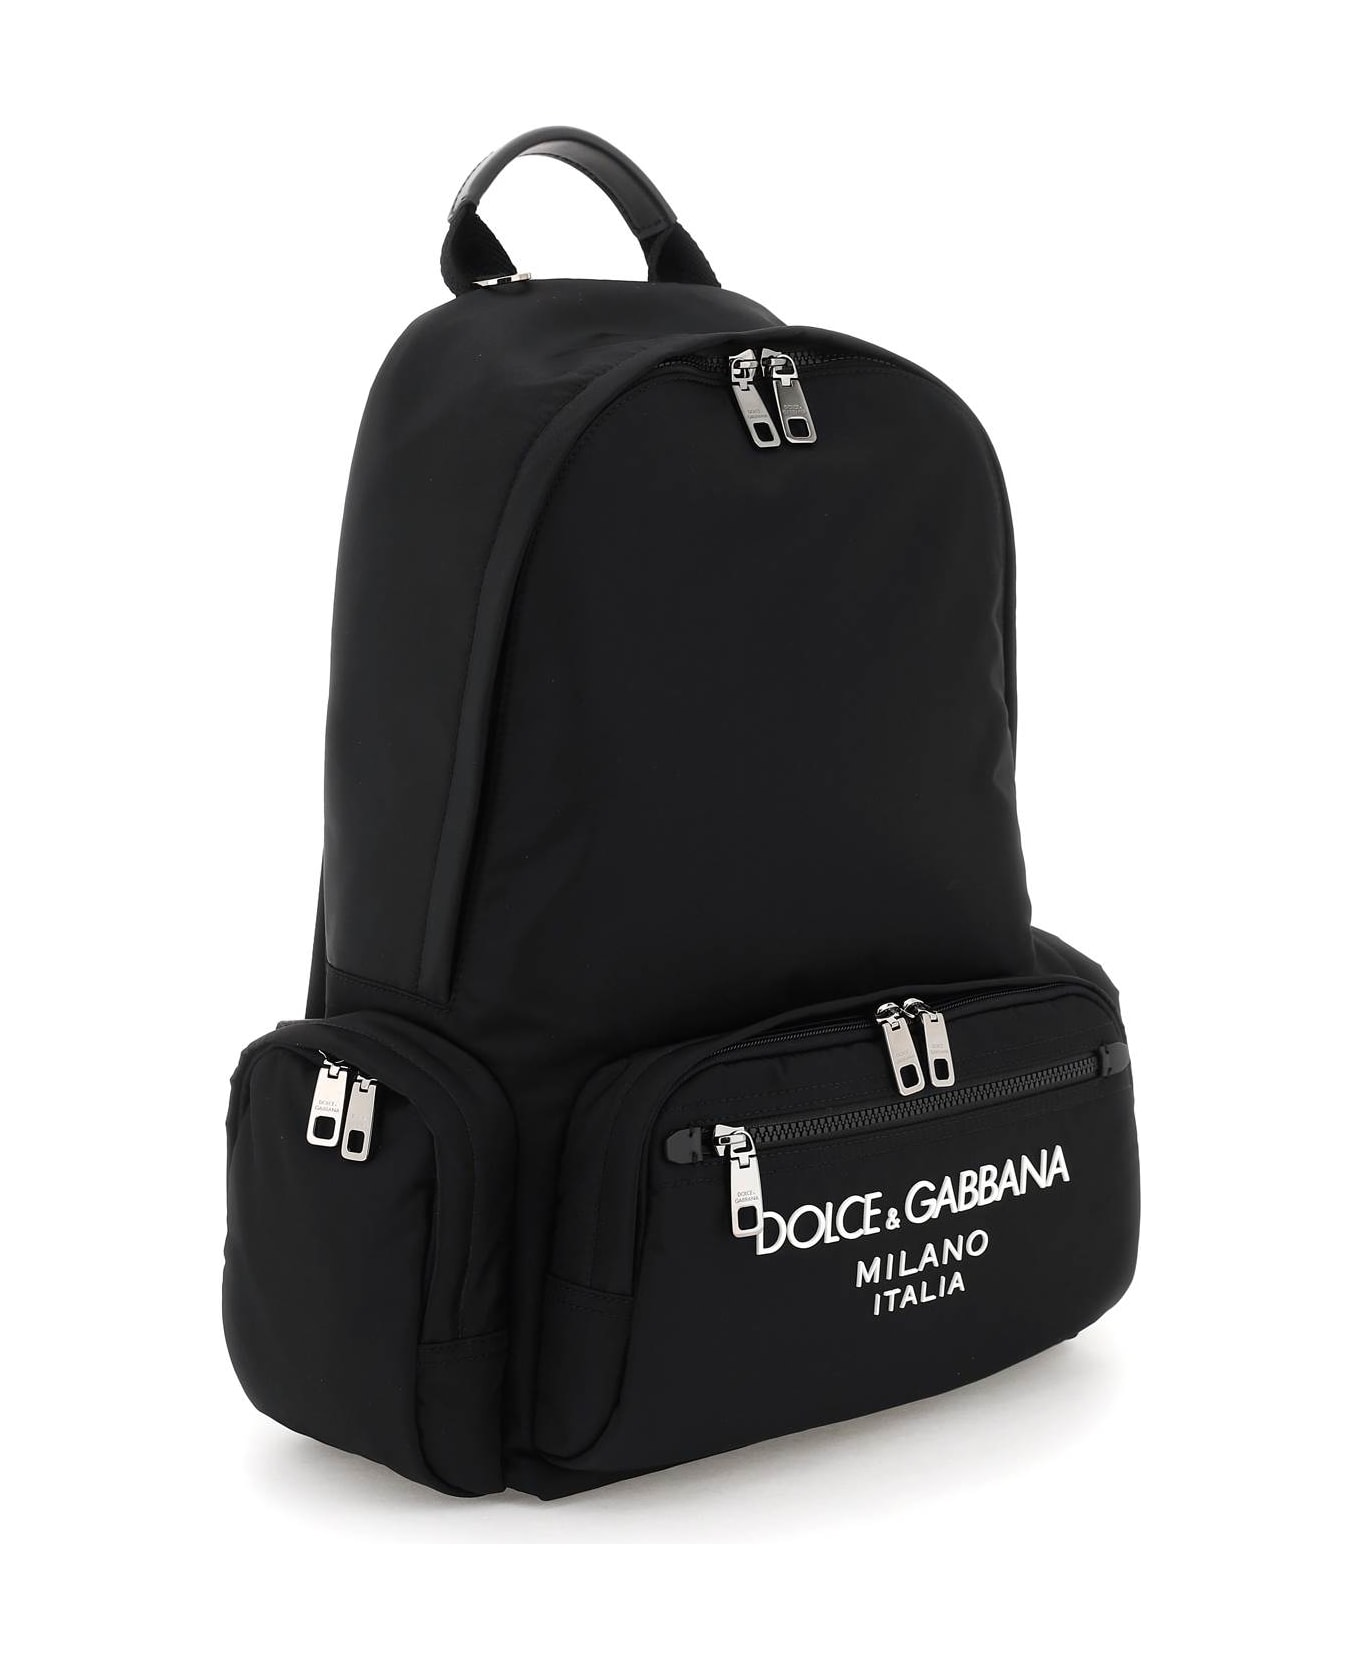 Dolce & Gabbana Nylon Backpack With Logo - Black